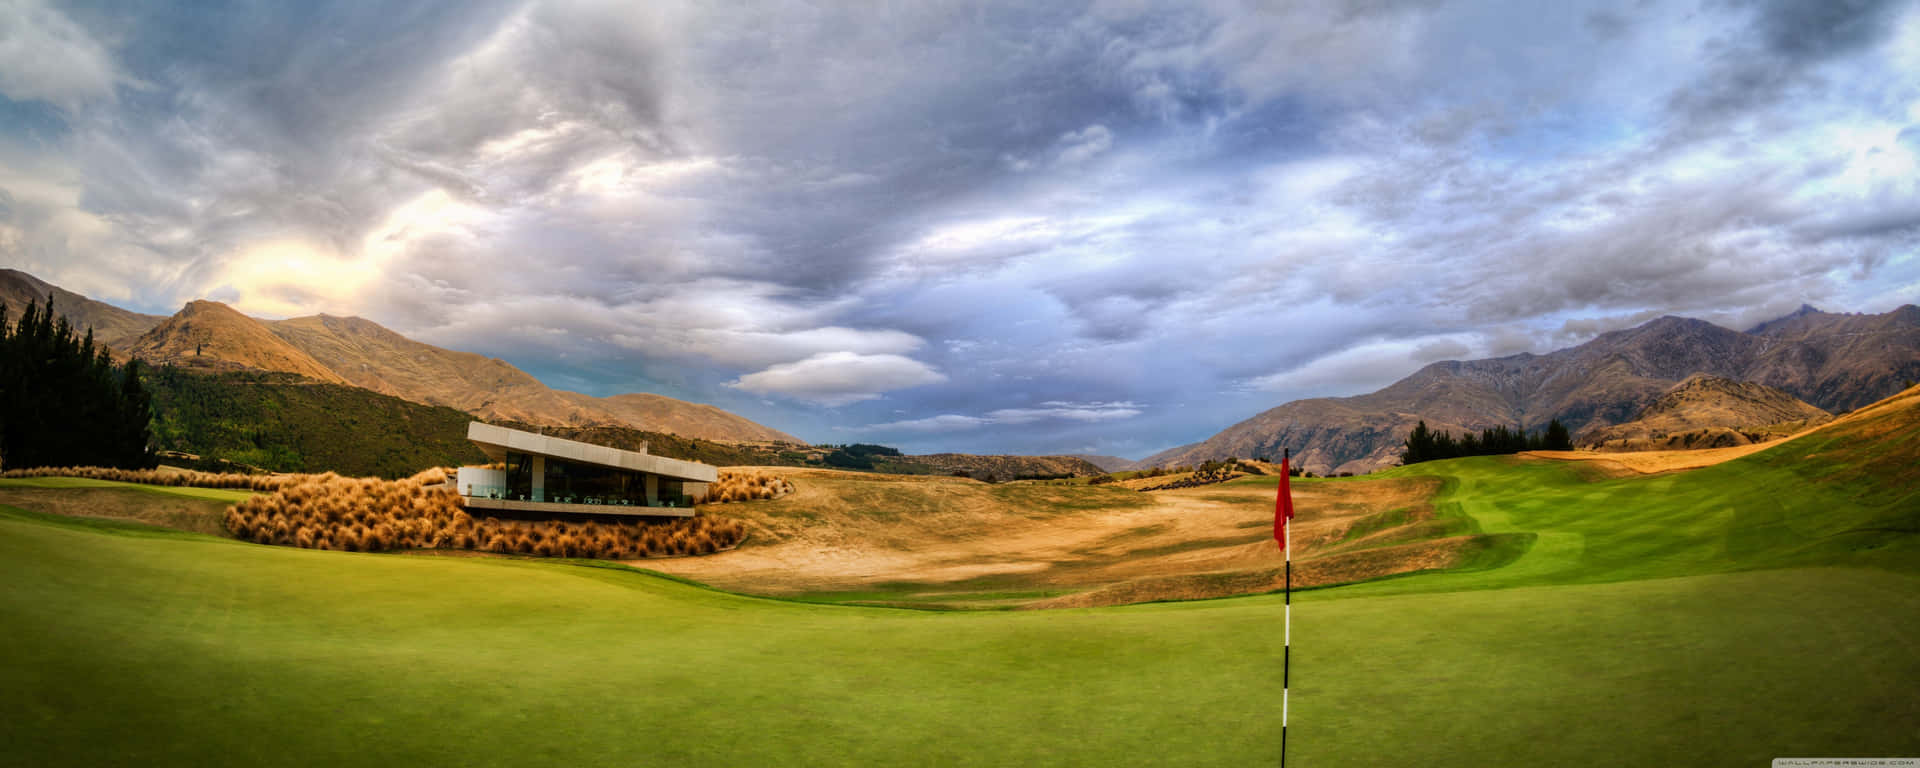 Perfekterausblick Auf Einen Golfplatz Wallpaper